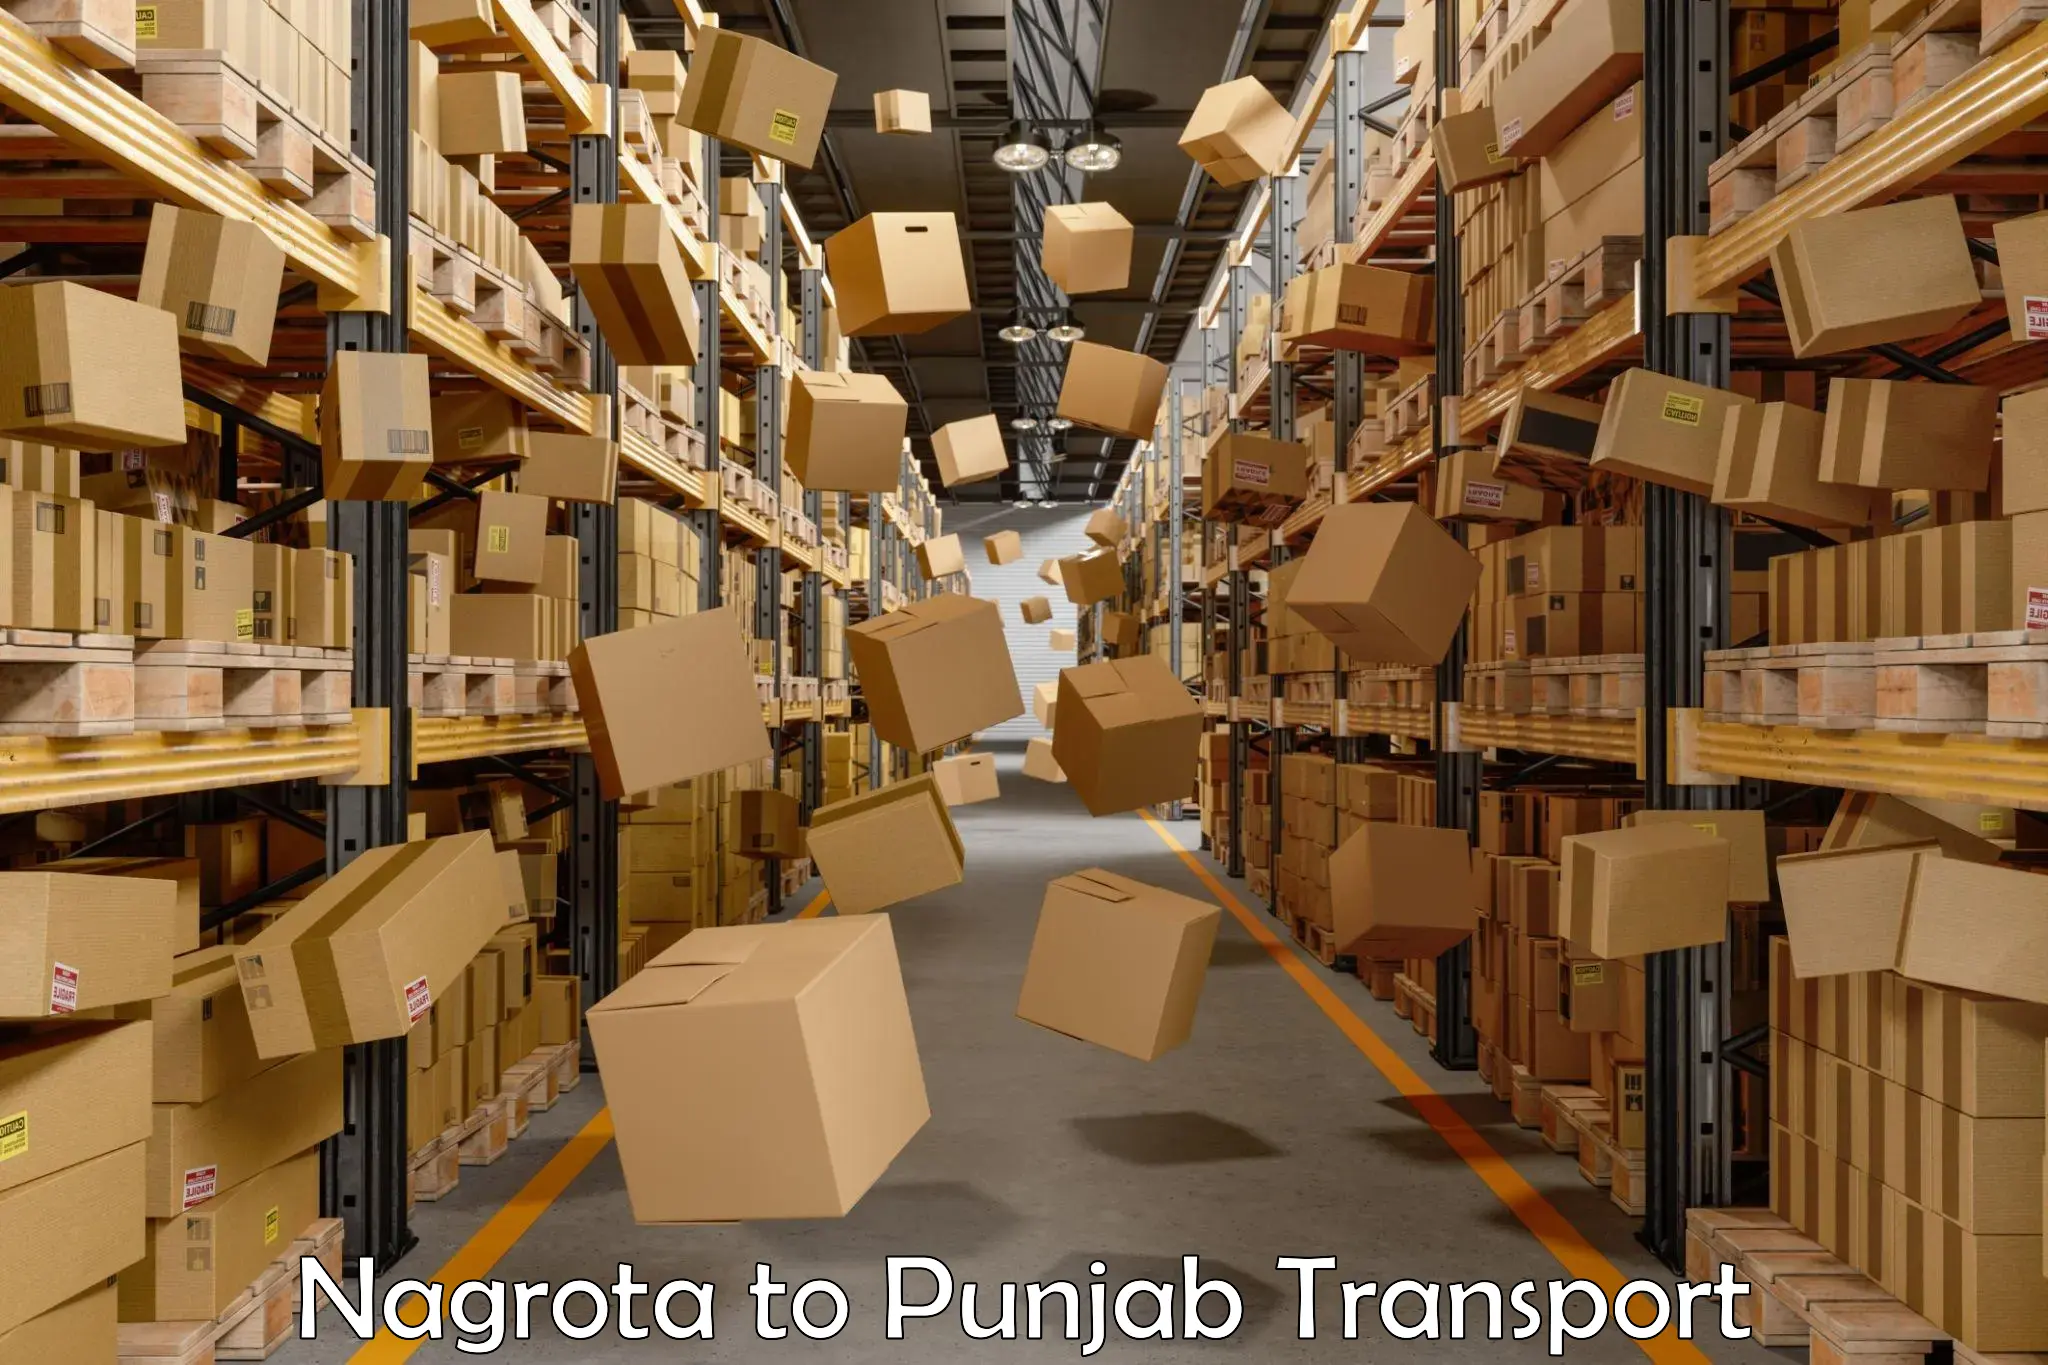 Daily transport service Nagrota to Punjab